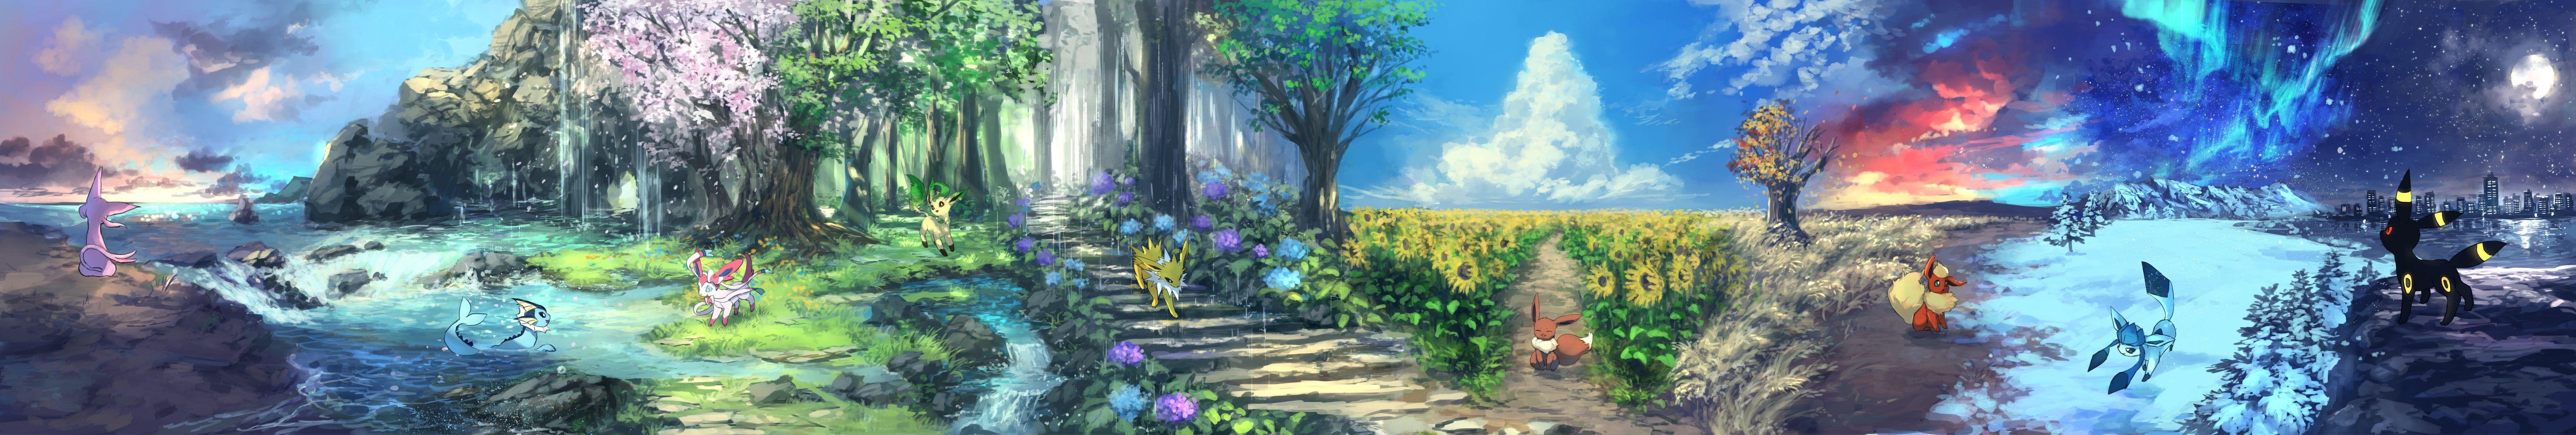 Pokémon Forest Wallpapers - Top Free Pokémon Forest Backgrounds